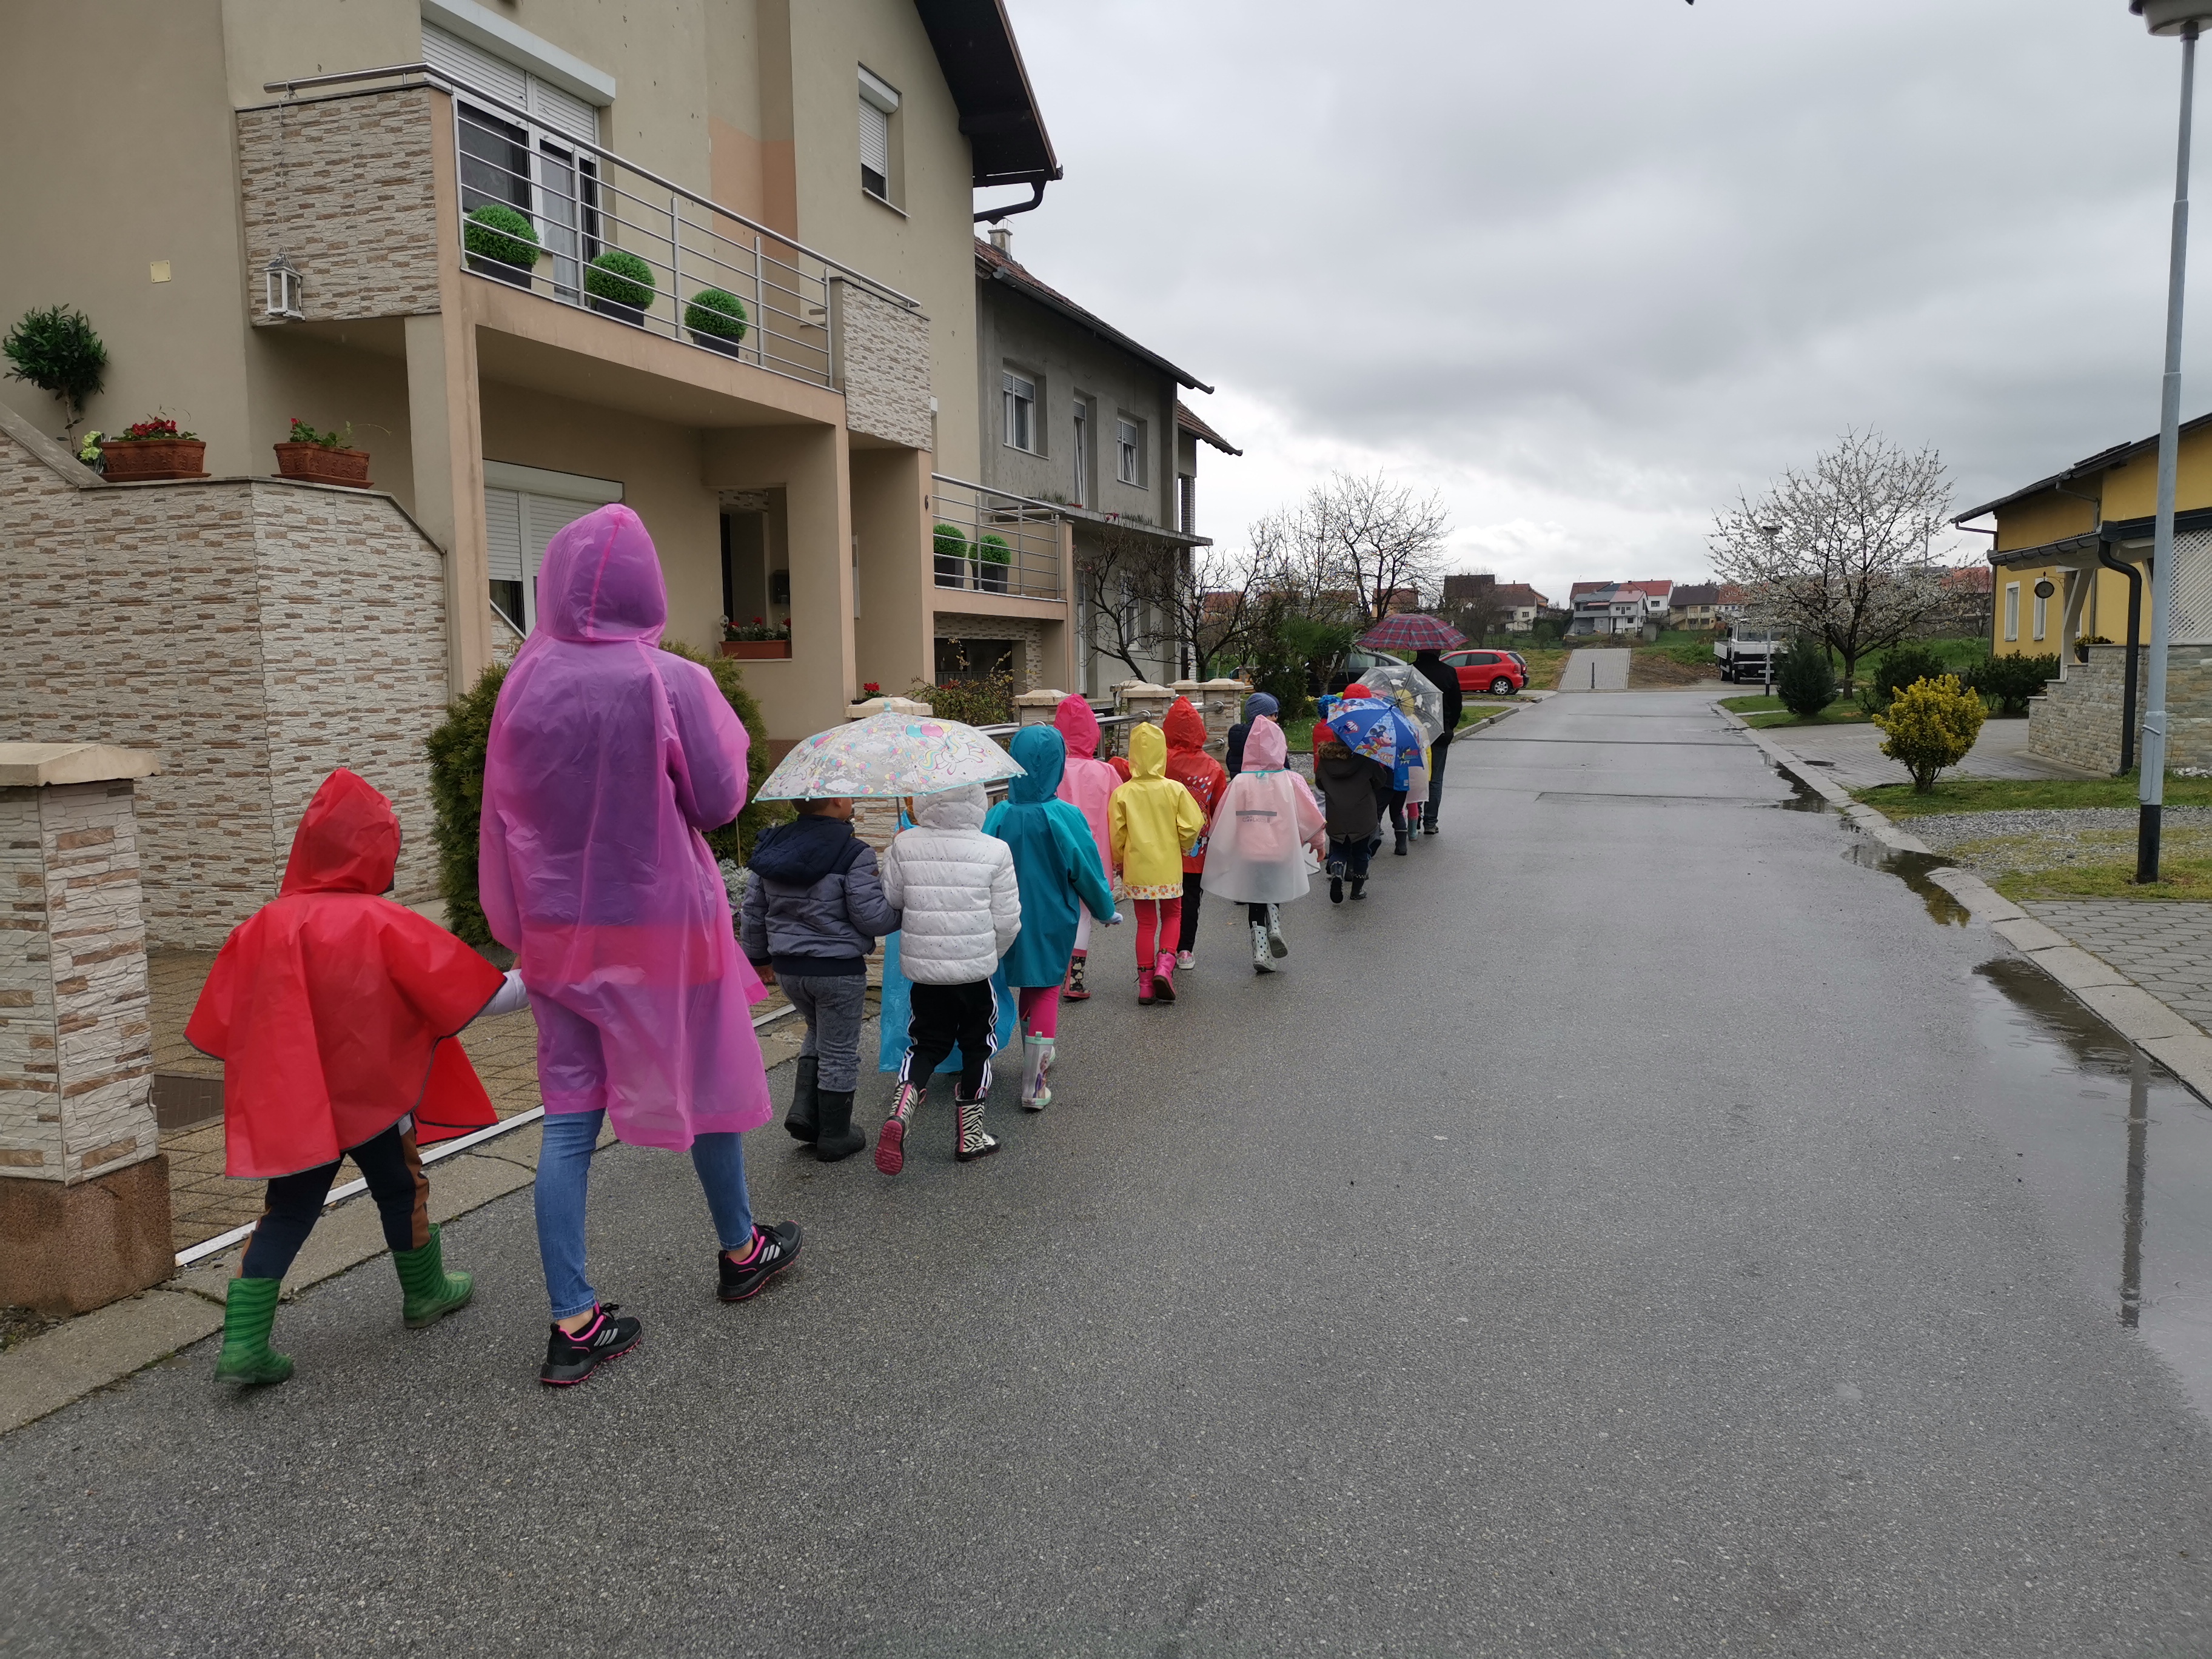 Požega.eu | Kiša pada, trava raste: Mališani i odgojitelji Cvjetne livade znaju da je šetnja po kiši najslađa